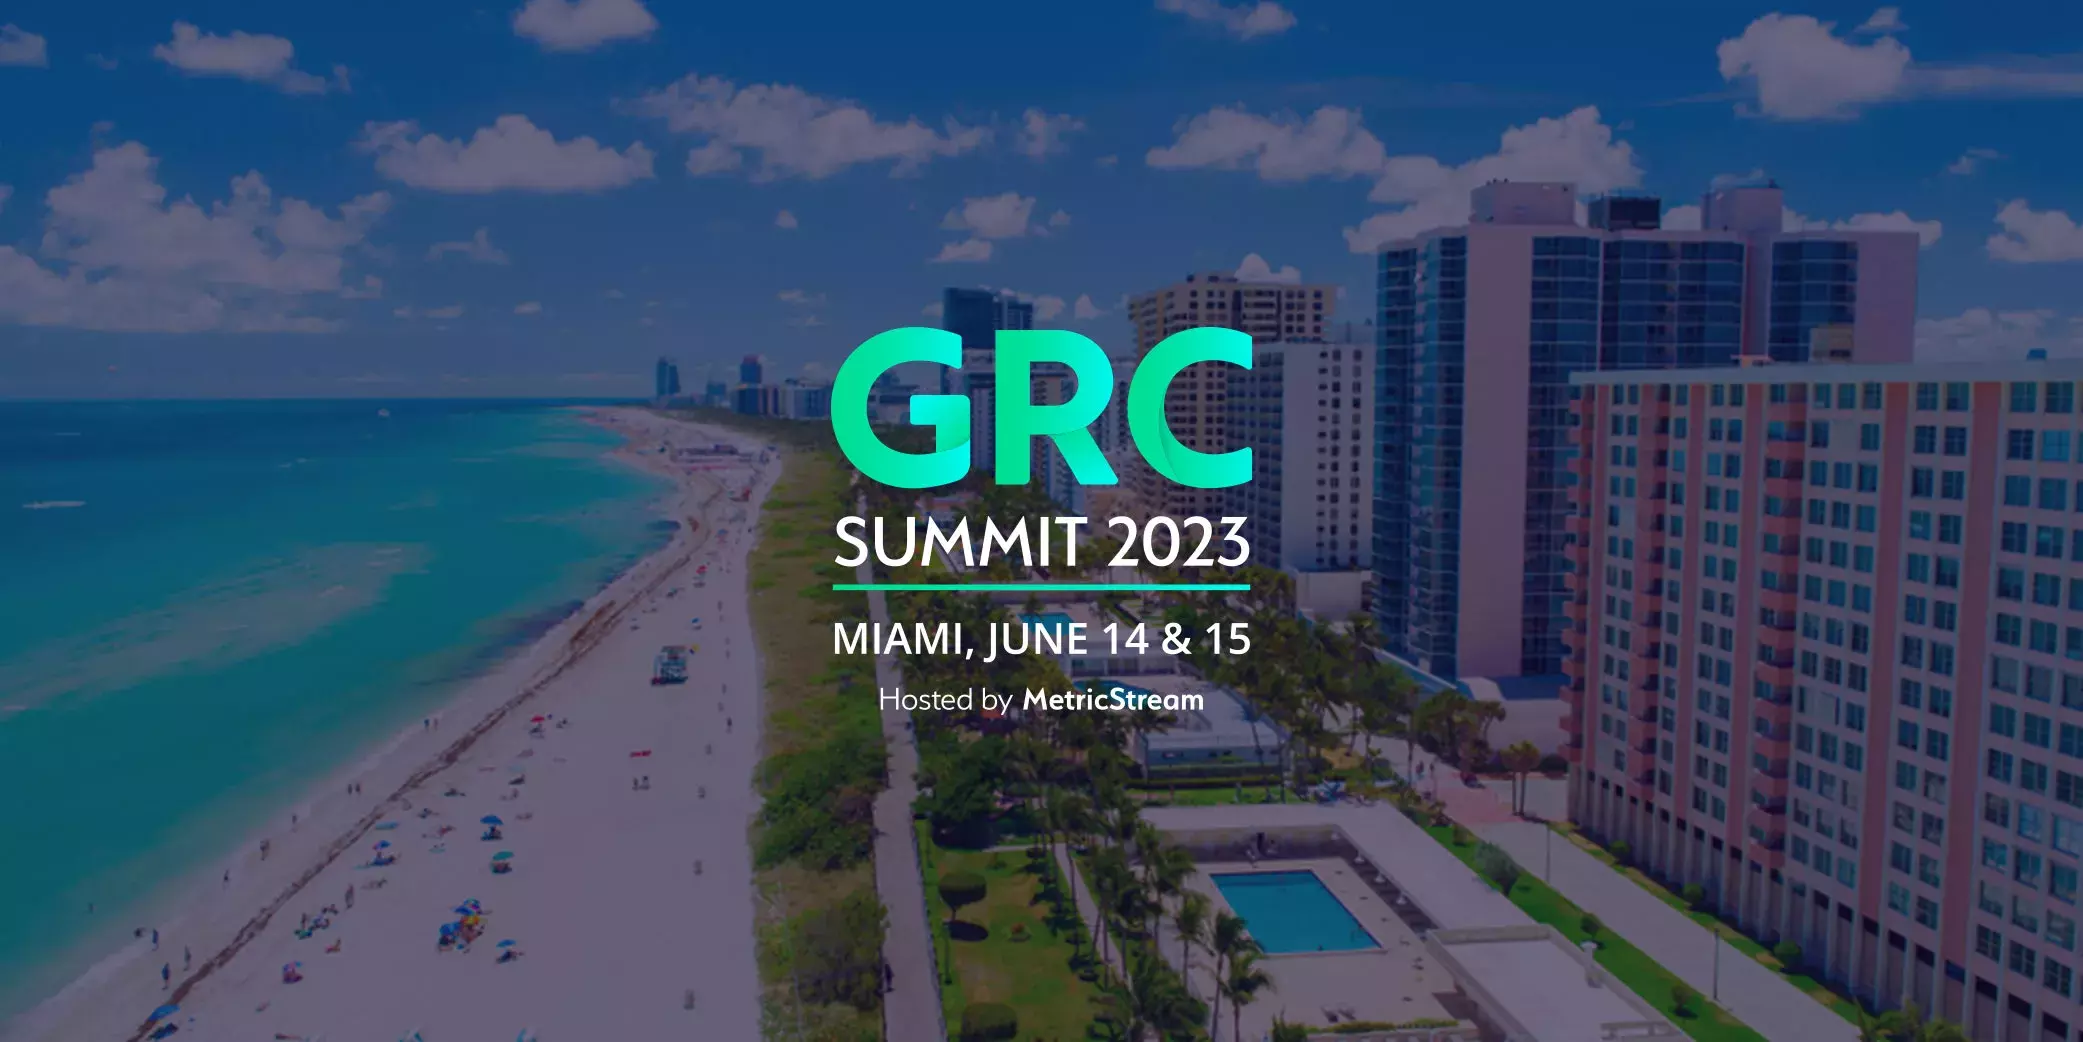 GRC Summit 2023